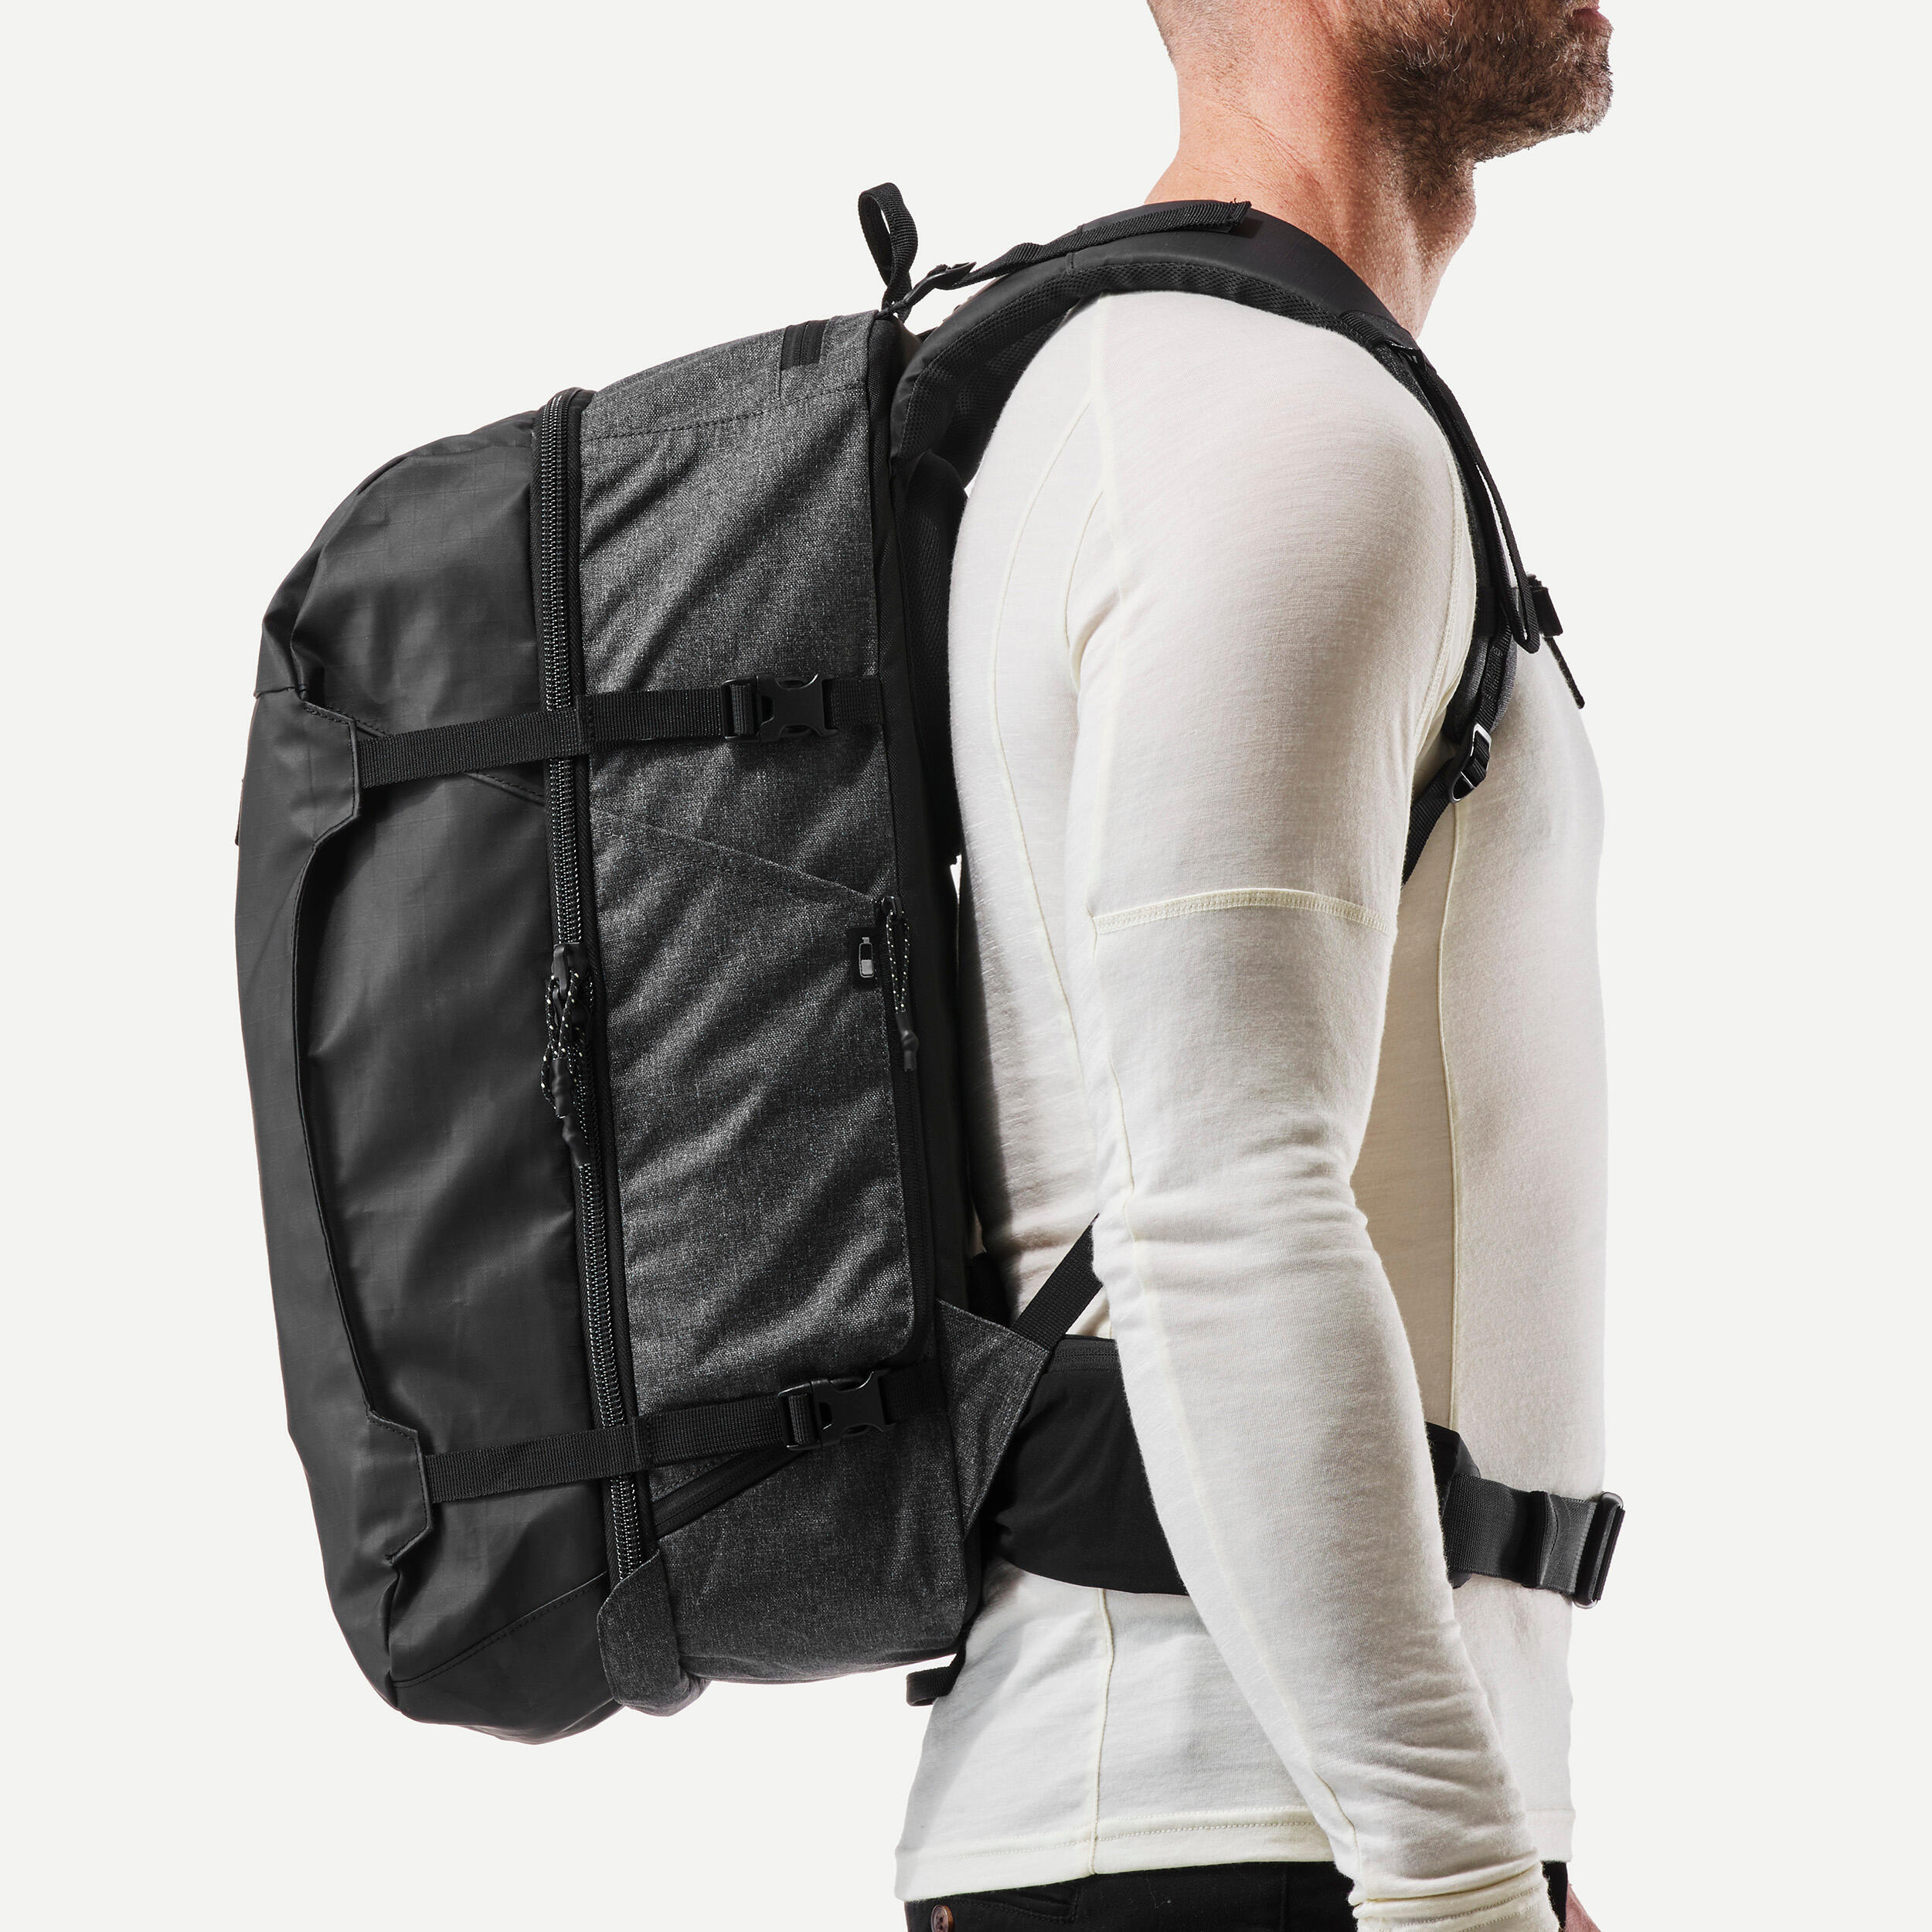 Travel Backpack 40 L - Travel 500 ORGANIZER Black 9/10